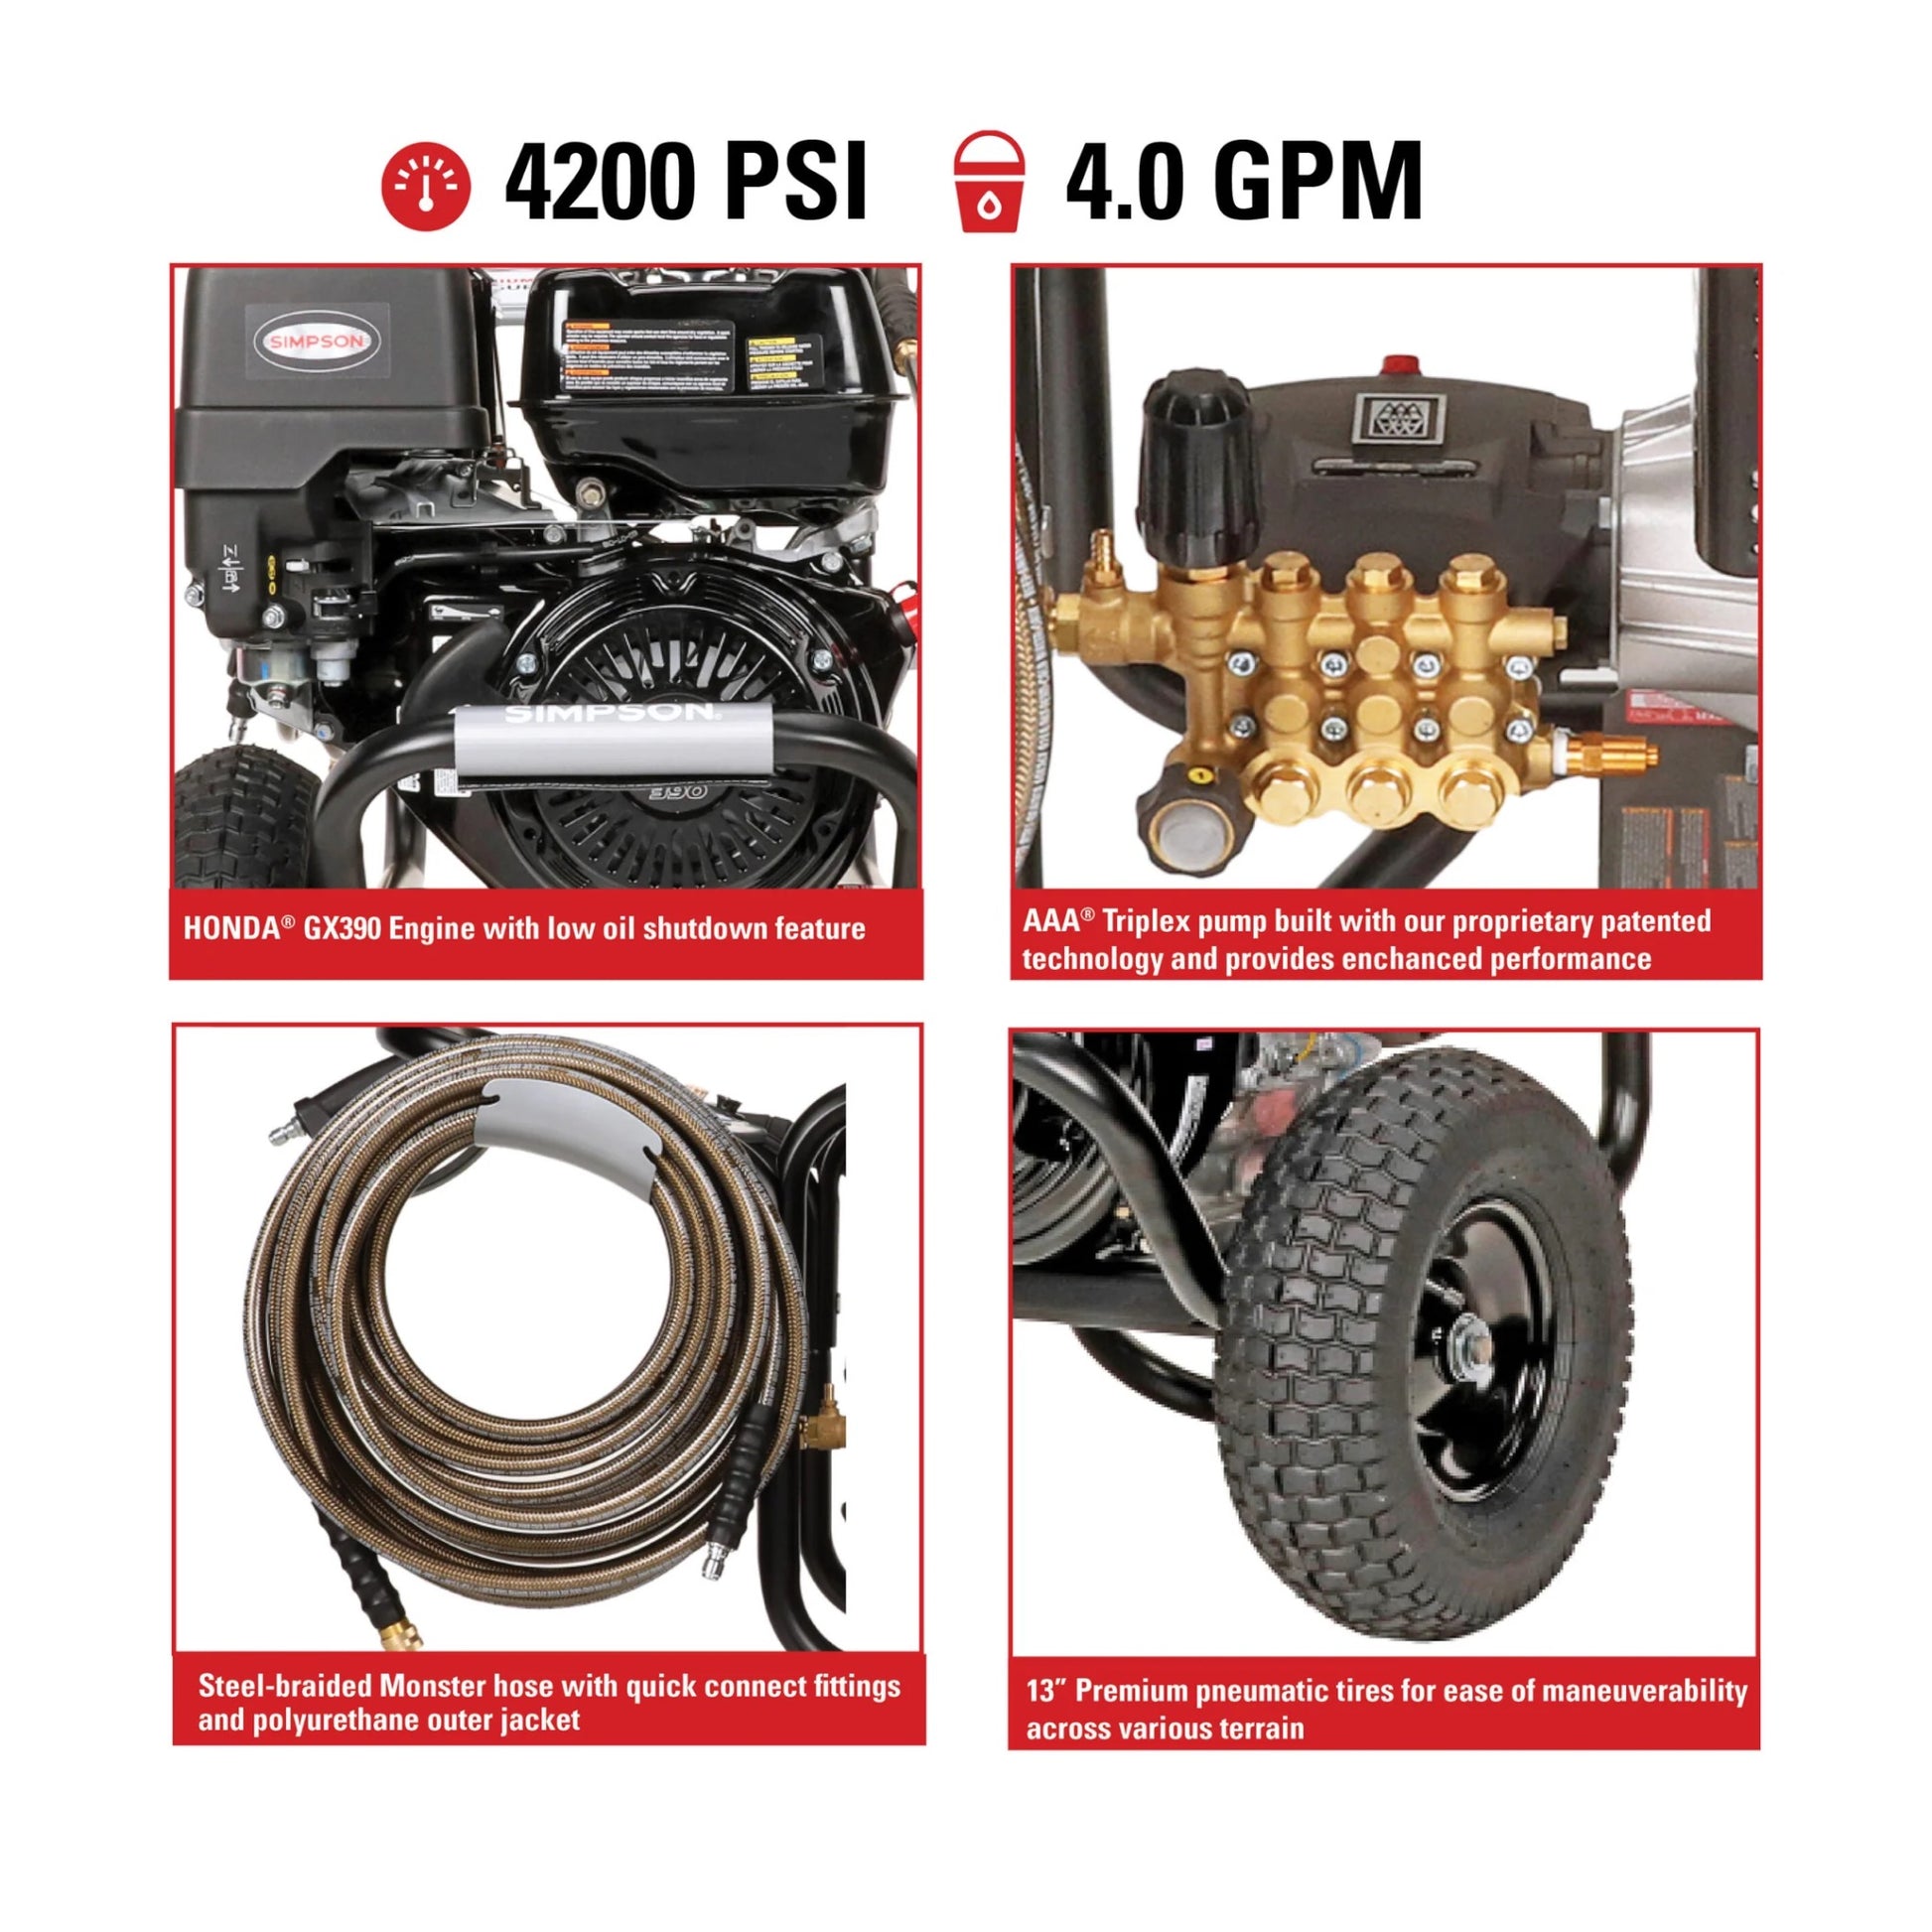 Lavadora a presión Simpson PS4240 Honda GX390 PowerShot 4200 PSI @ 4.0 GPM